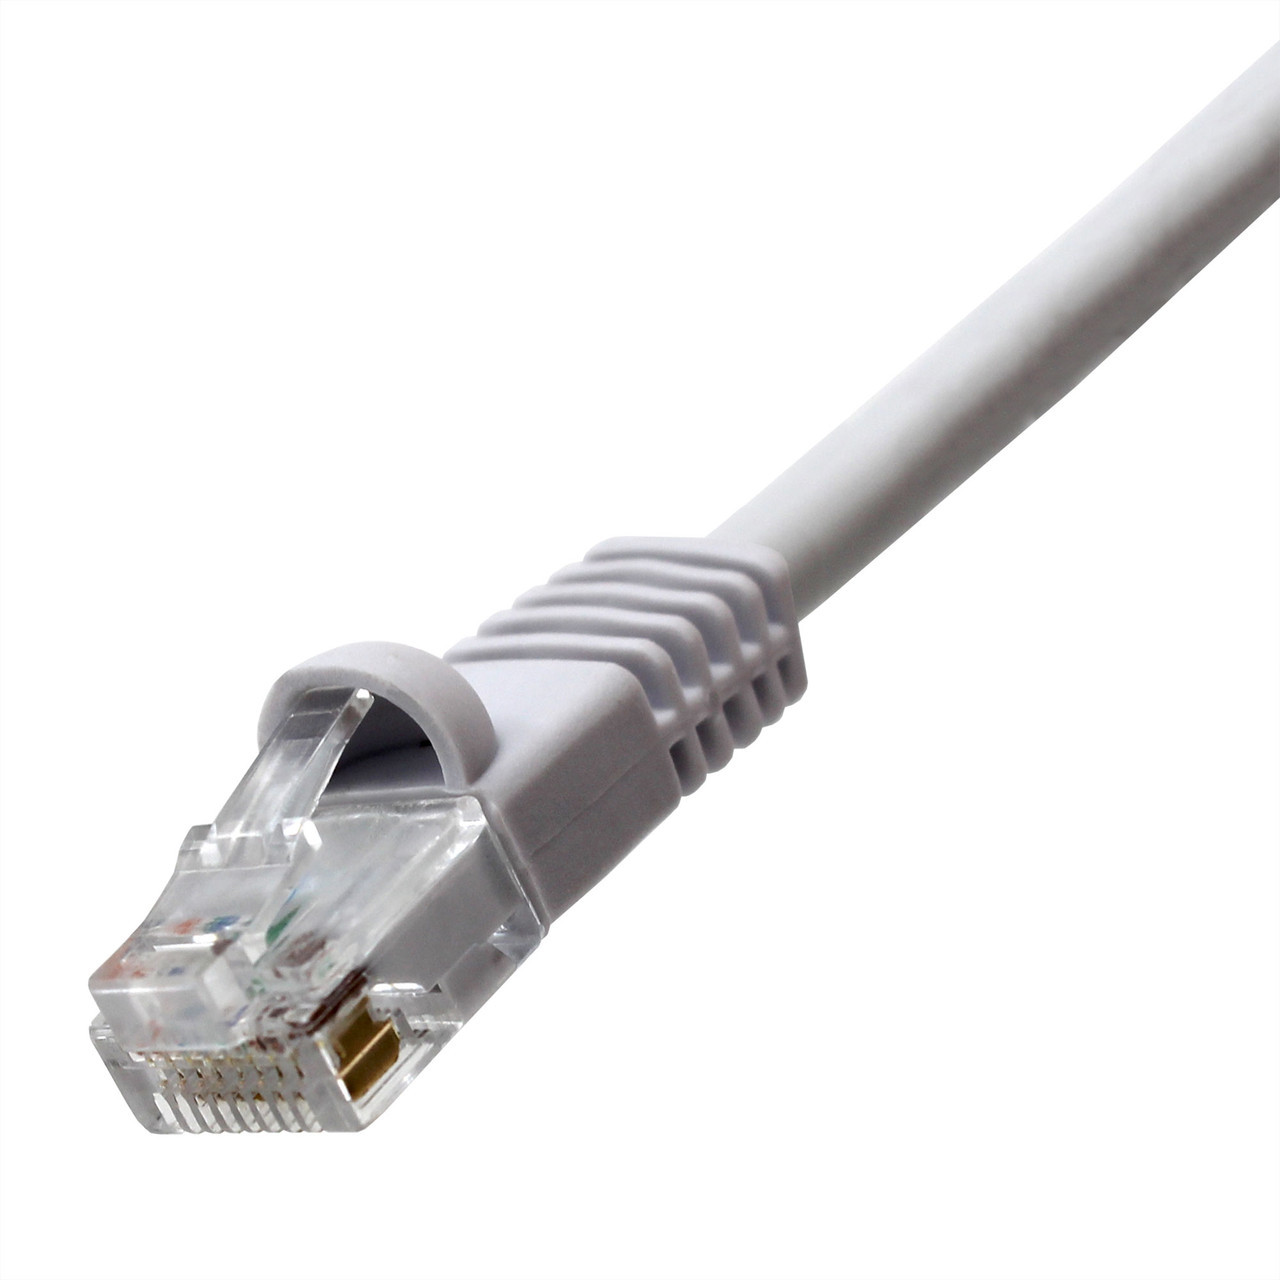 Cat5e Snagless Unshielded (UTP) Ethernet Cable - White Jacket